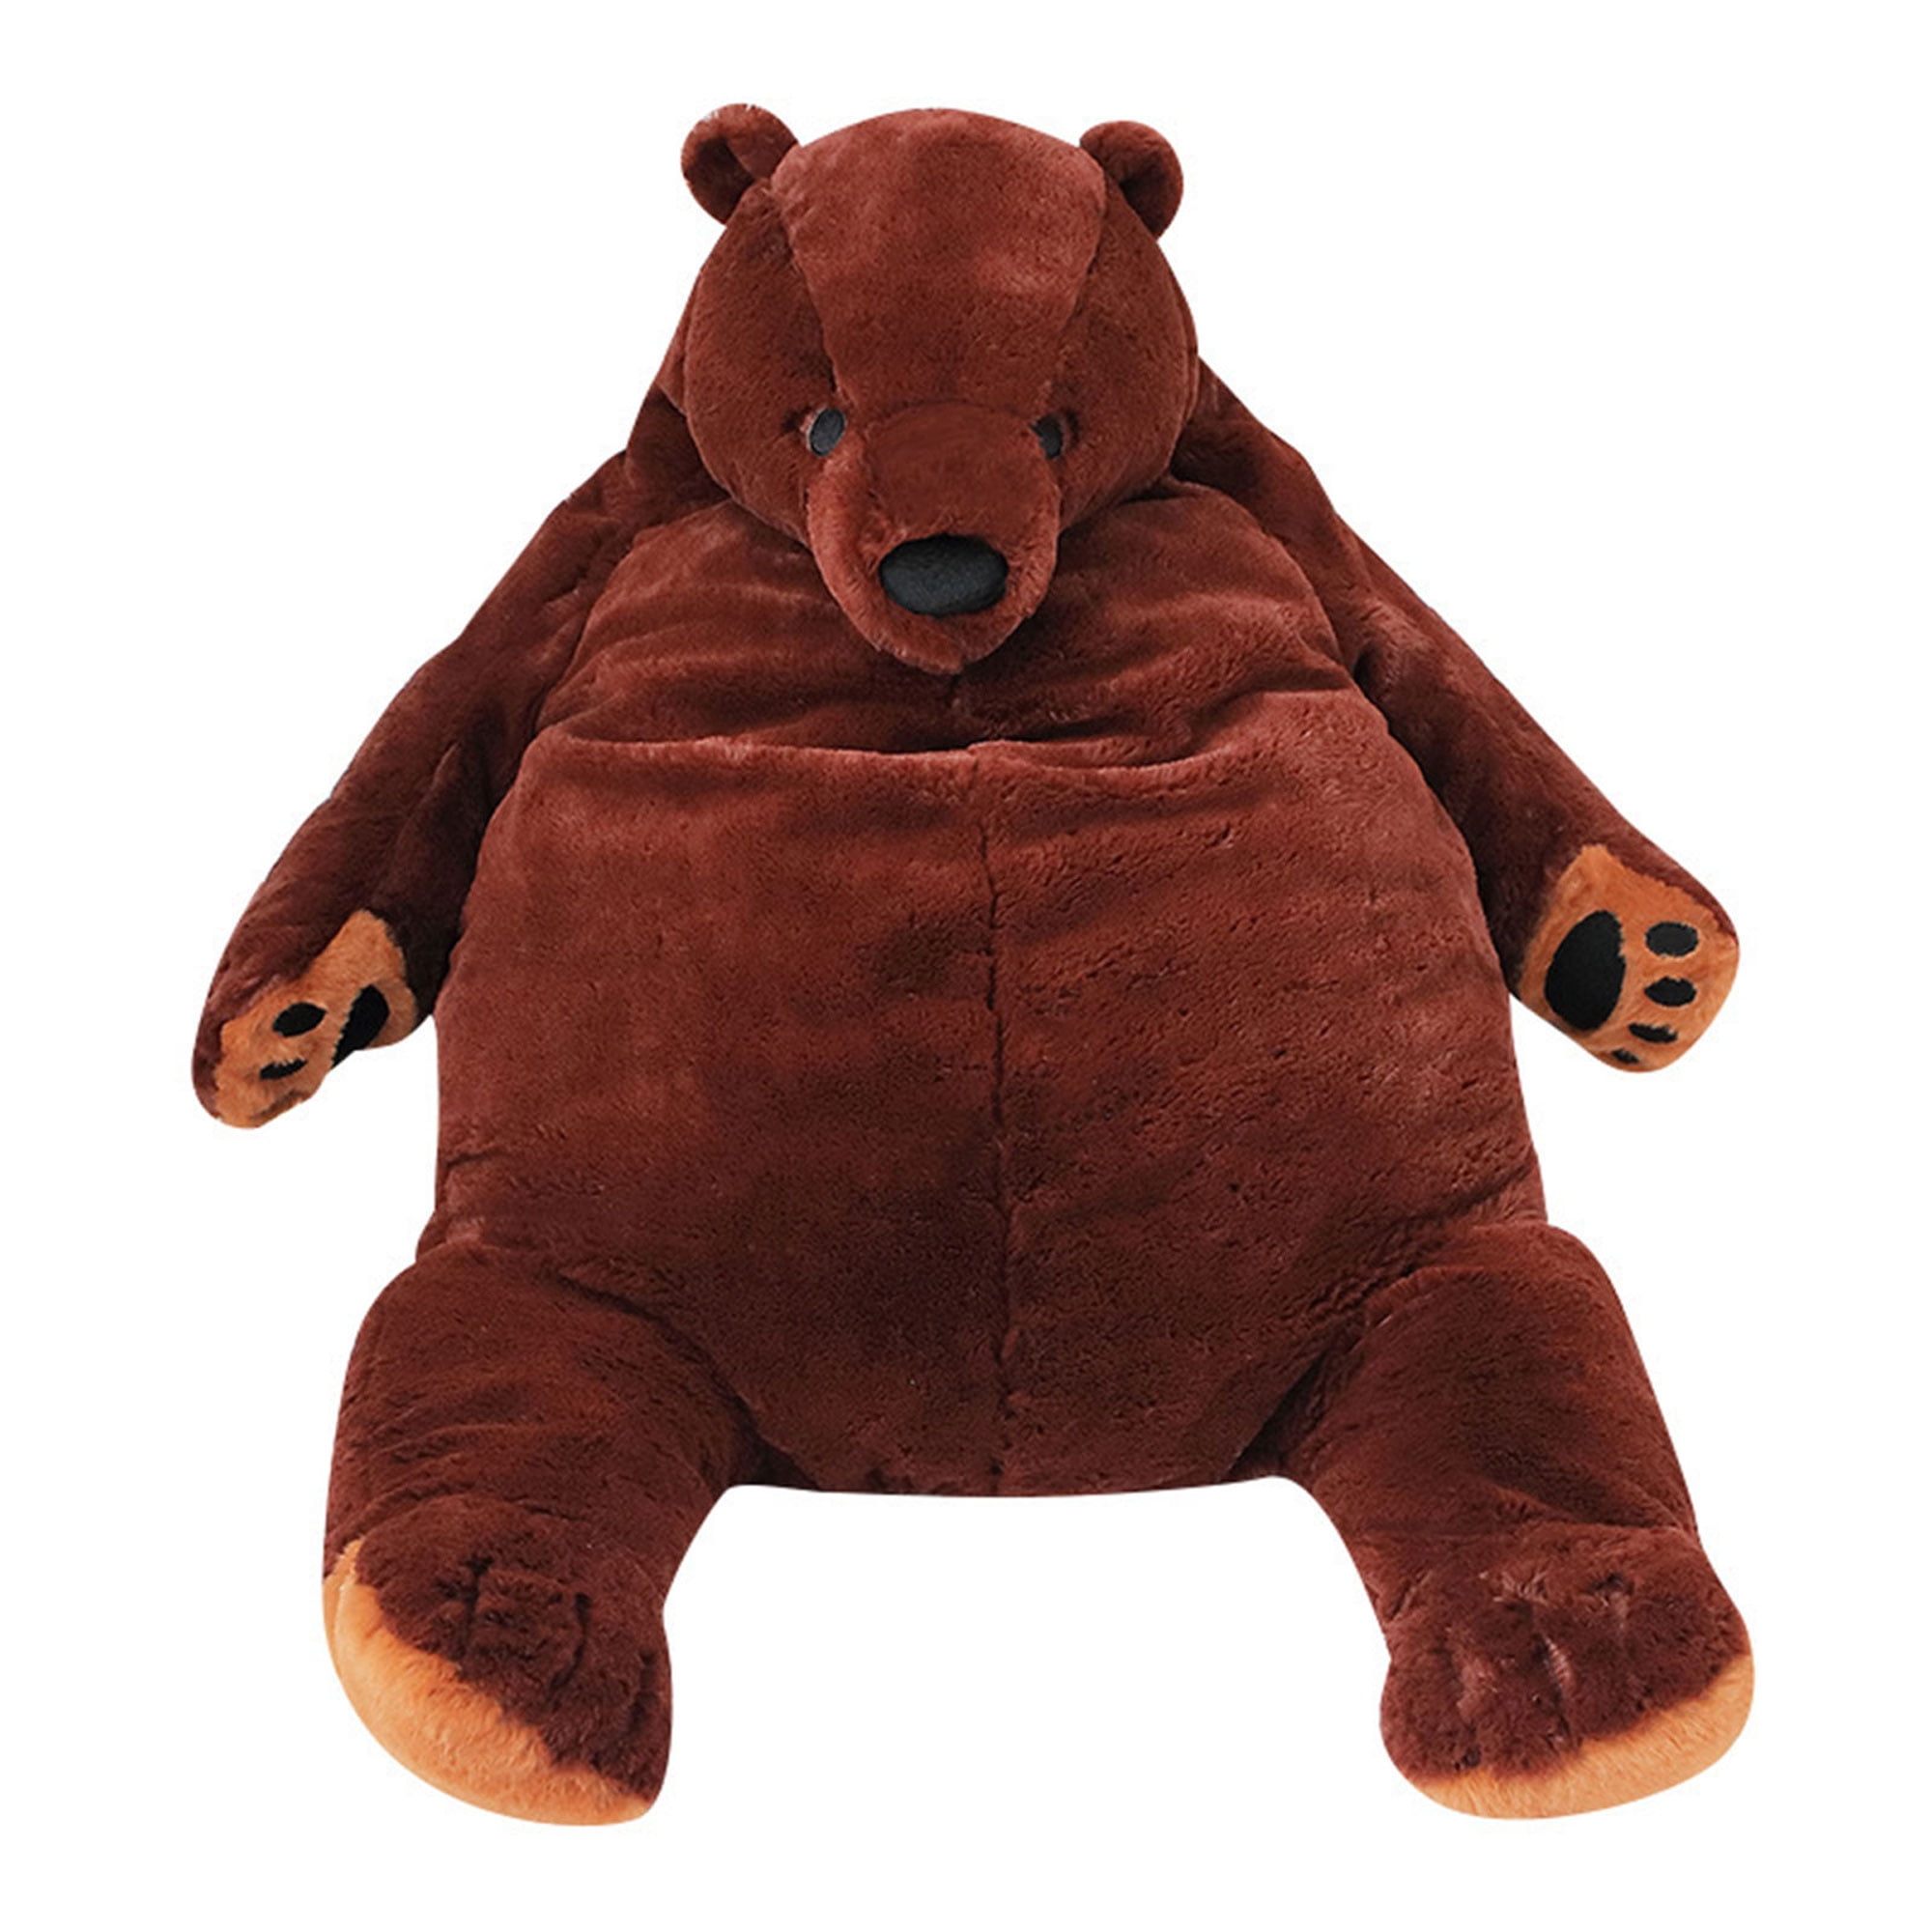 Big Stuffed Animal Gift 60CM-120CM Huge Teddy Bear Giant Plush Soft Cotton Toy 